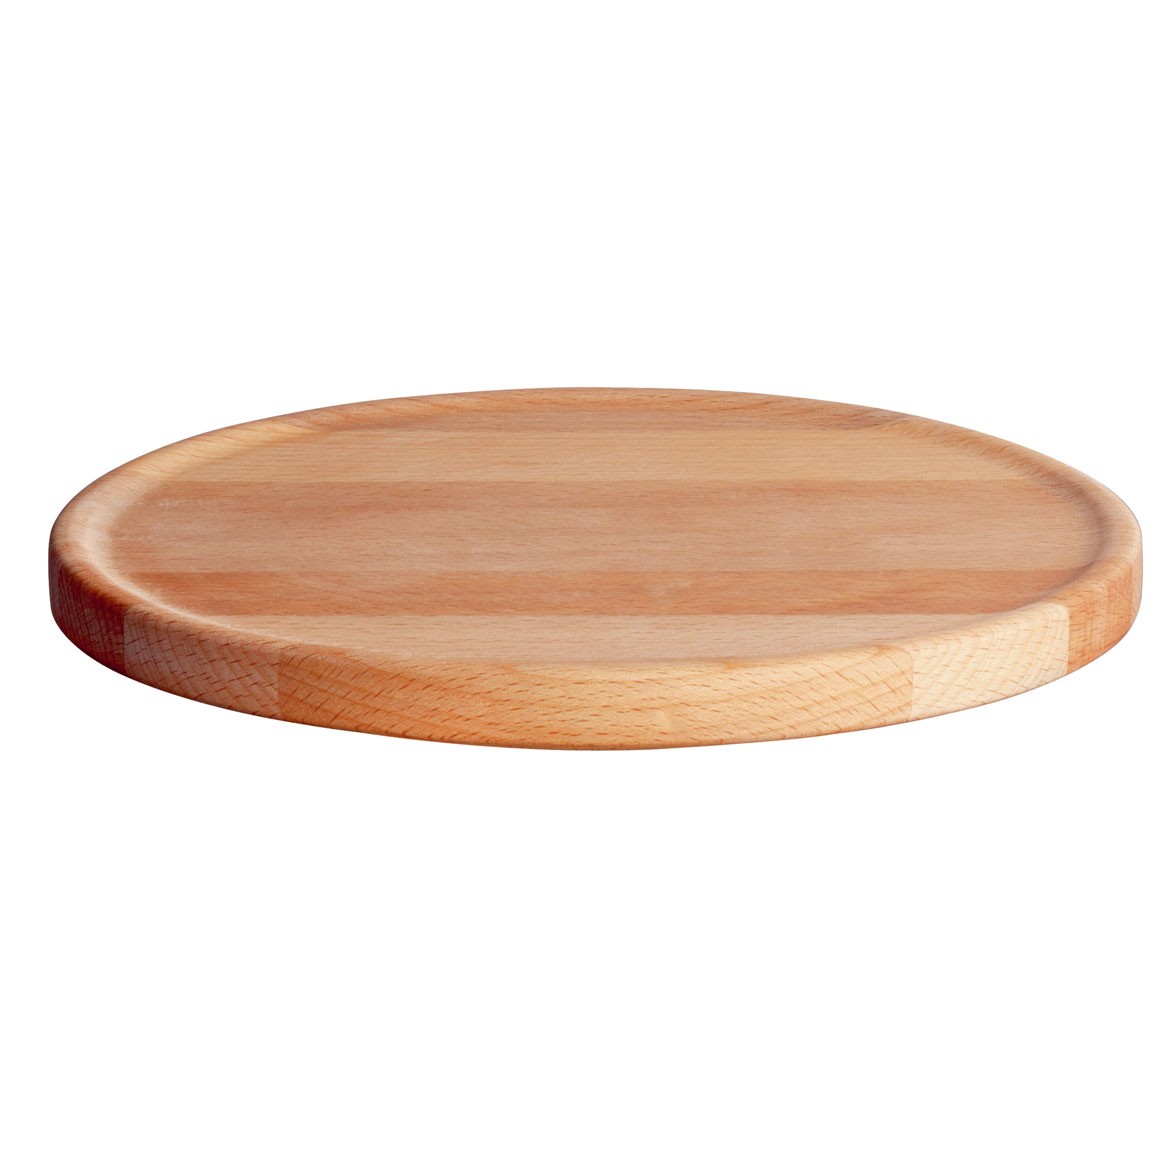 Fretta round. Деревянная тарелка. Круглая деревянная доска. Деревянное блюдо для подачи. Деревянная тарелка-доска.